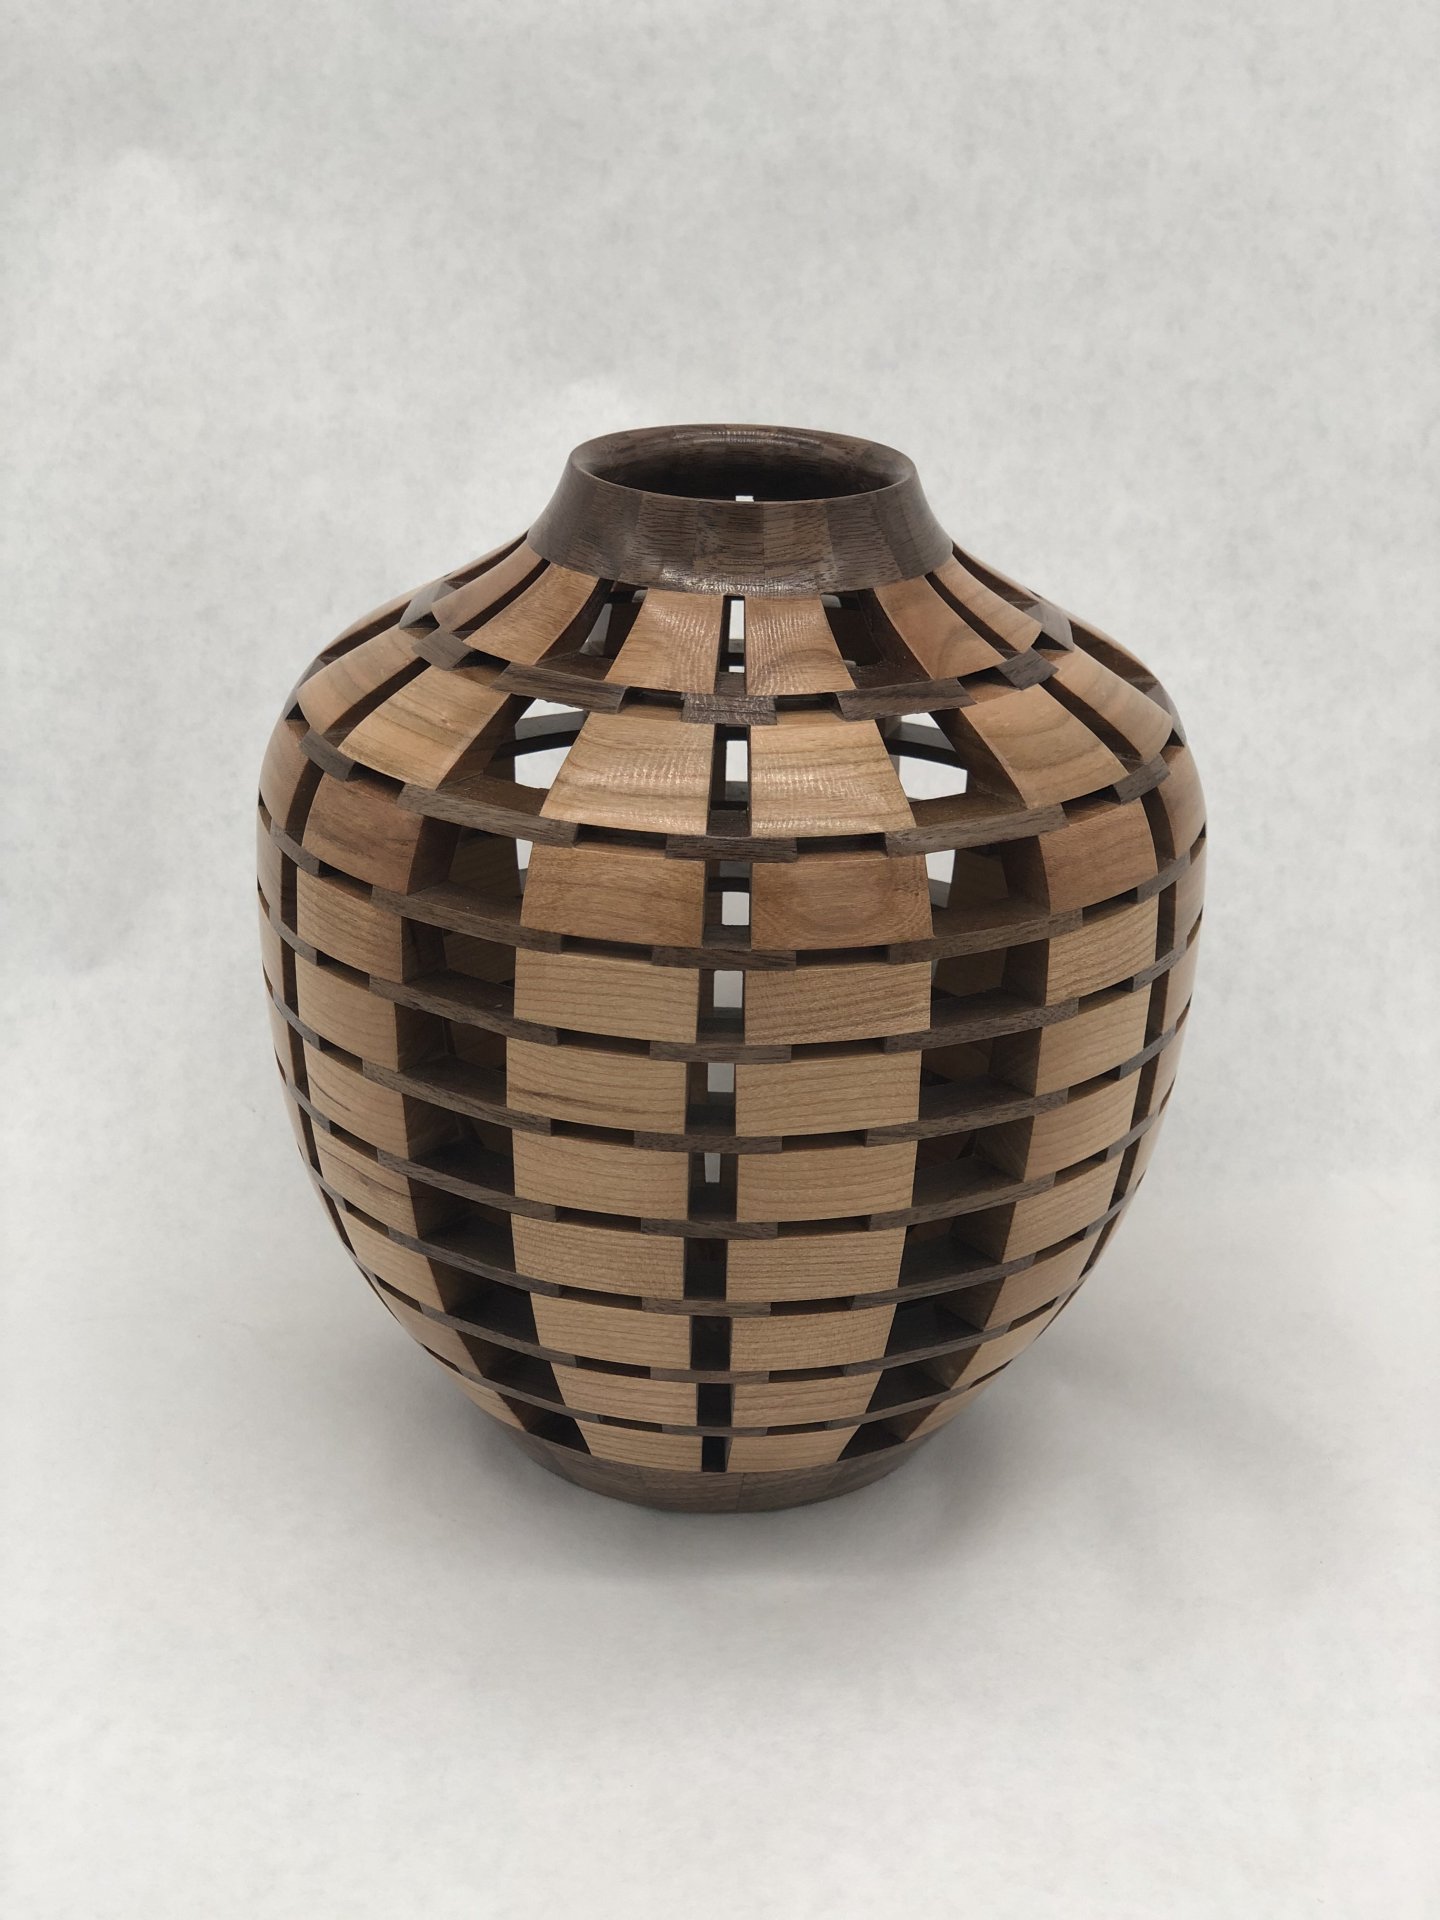 Open Segment Vase